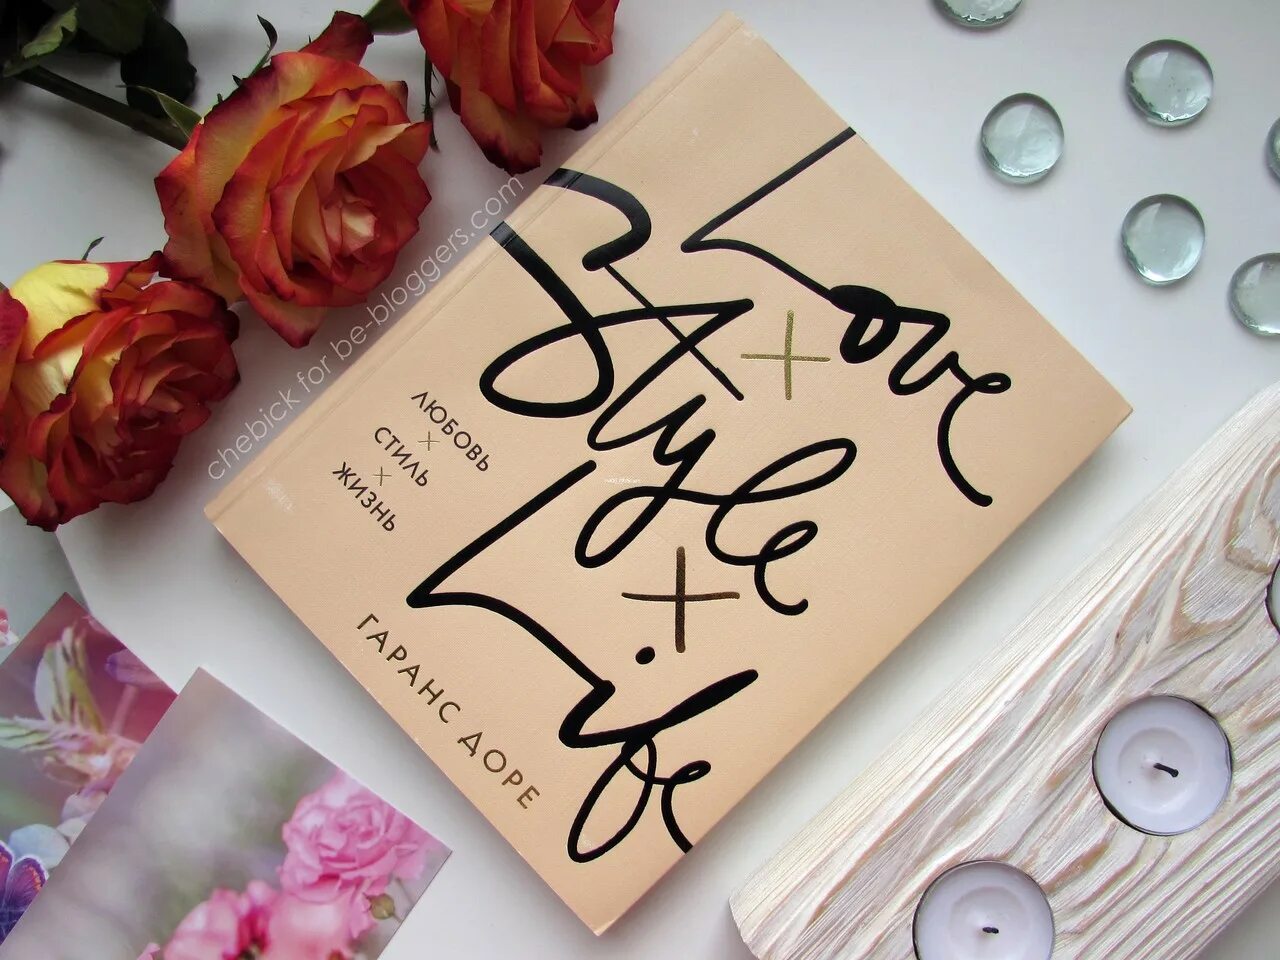 Life is style. Гаранс Дорэ. «Любовь. Стиль. Жизнь». Гаранс Доре любовь стиль жизнь. Love Style Life книга. Love стиль.